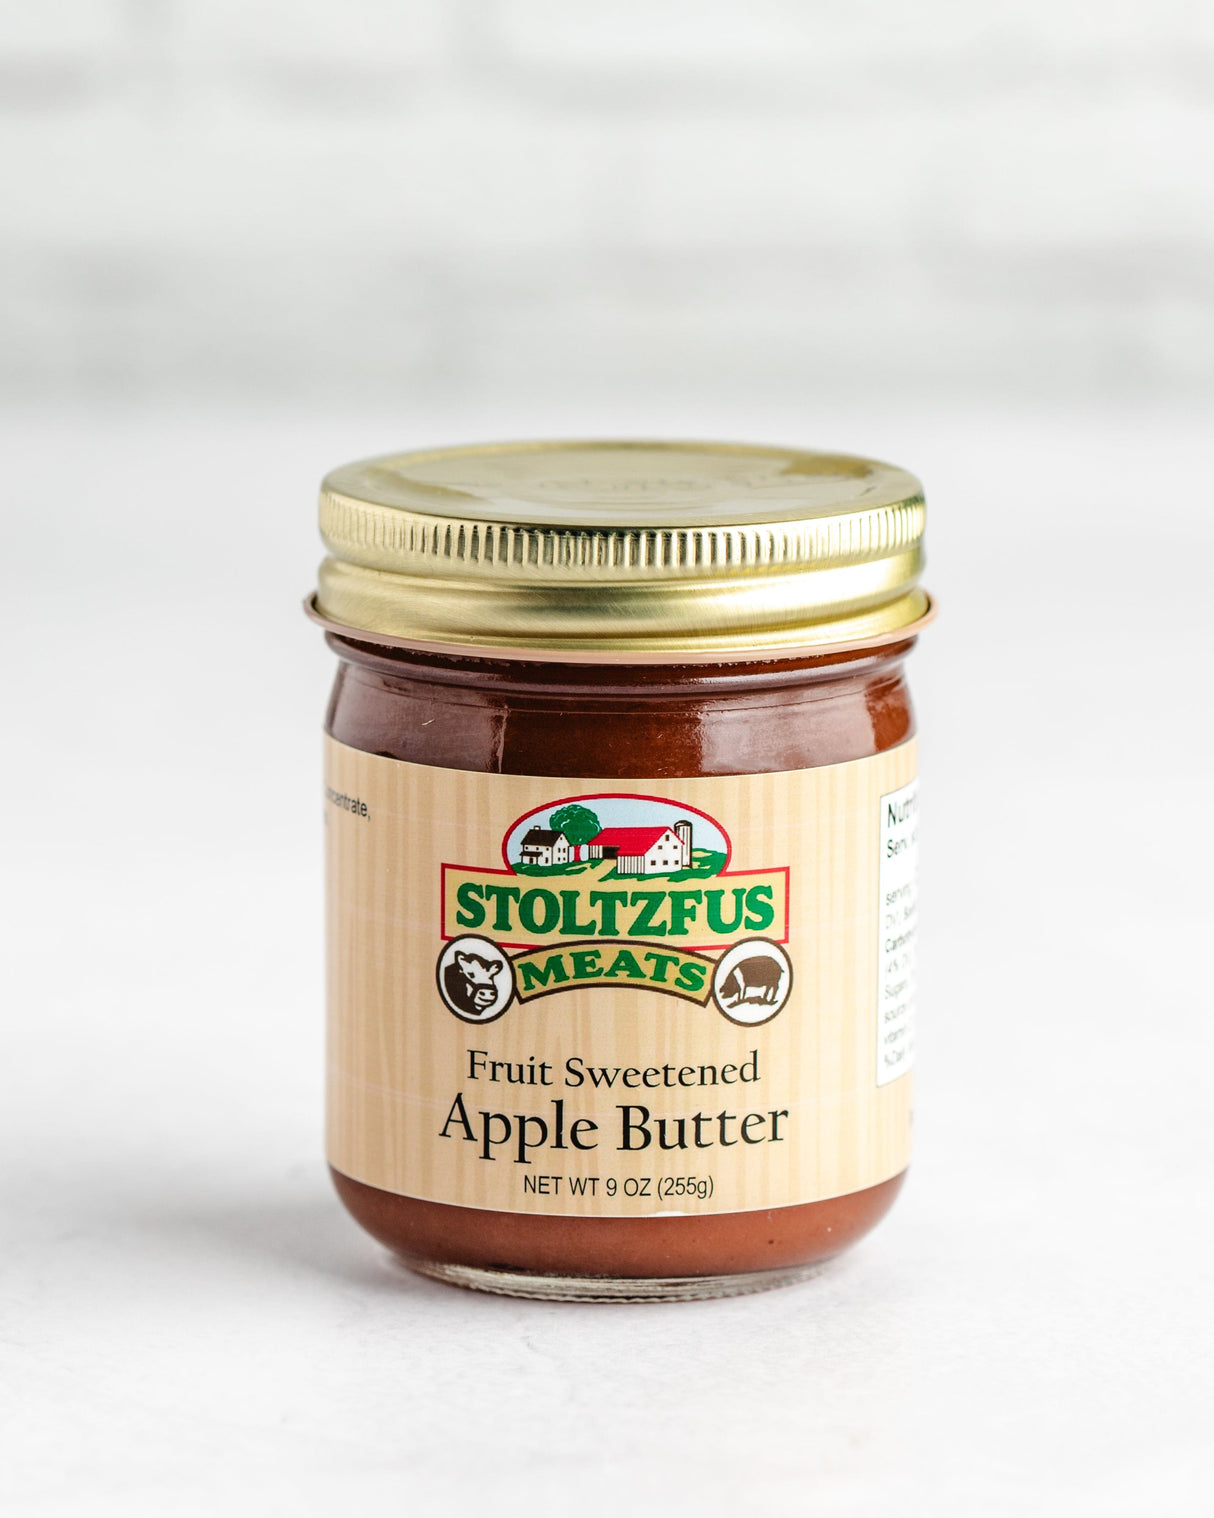 – Stoltzfus Meats Apple Butter